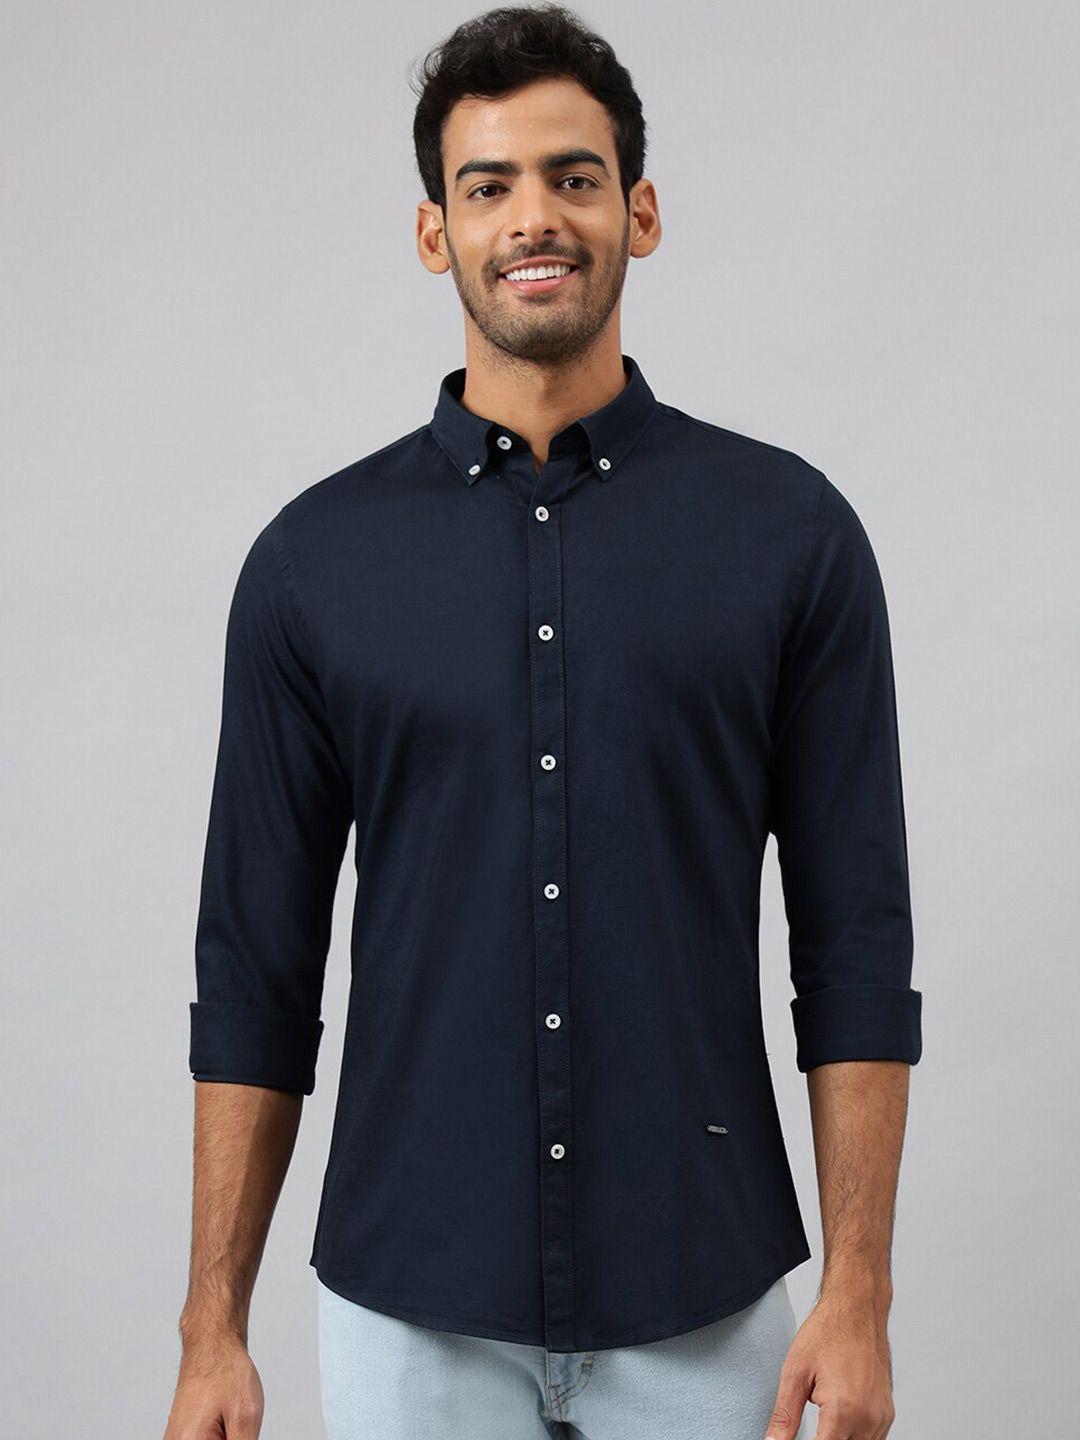 mr button men navy blue solid slim fit cotton casual shirt